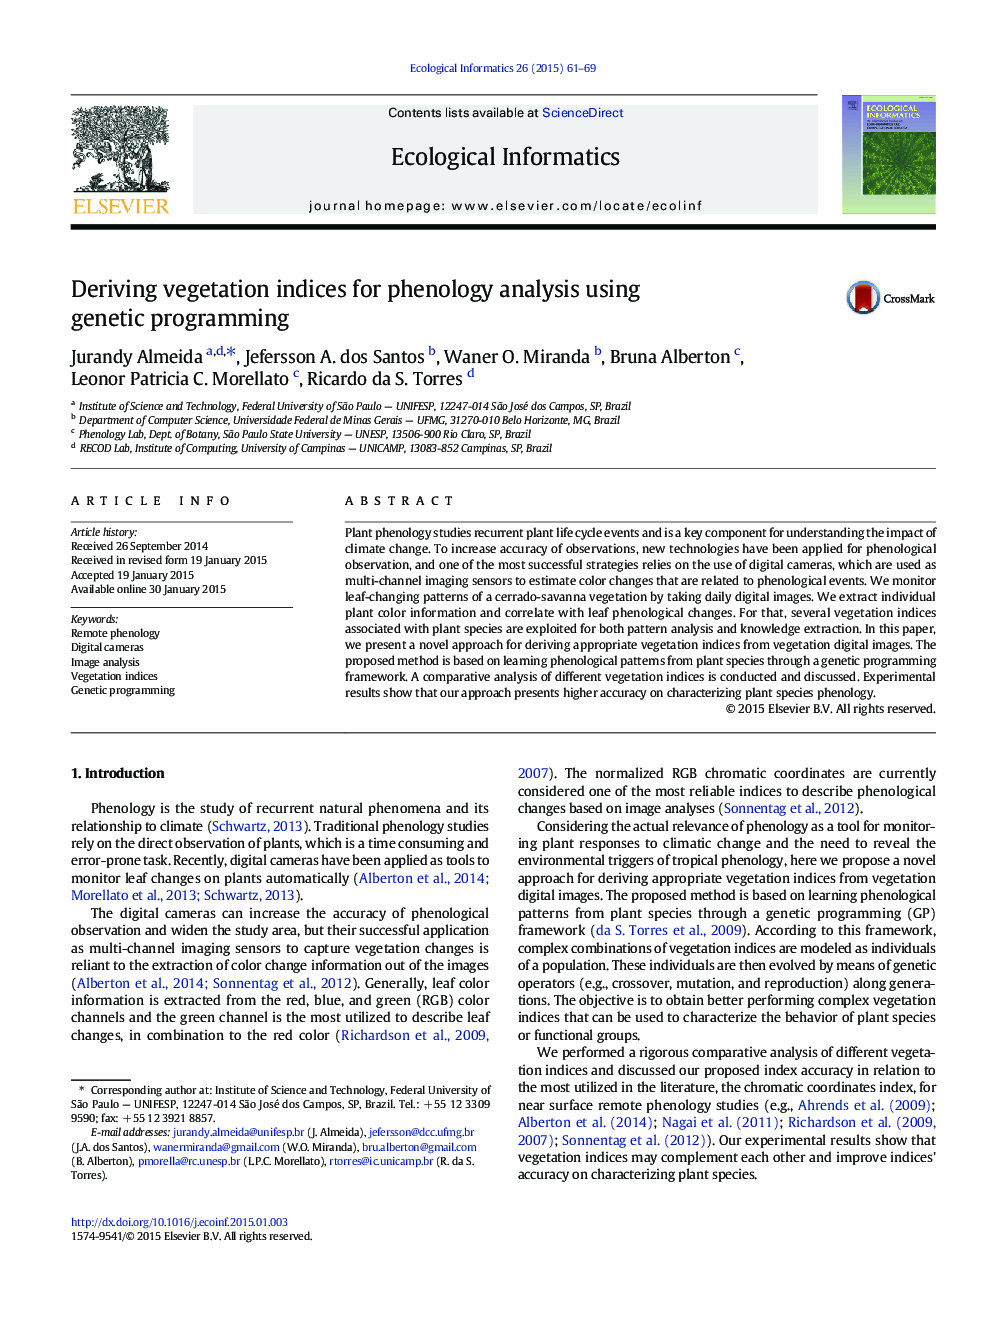 Deriving vegetation indices for phenology analysis using genetic programming